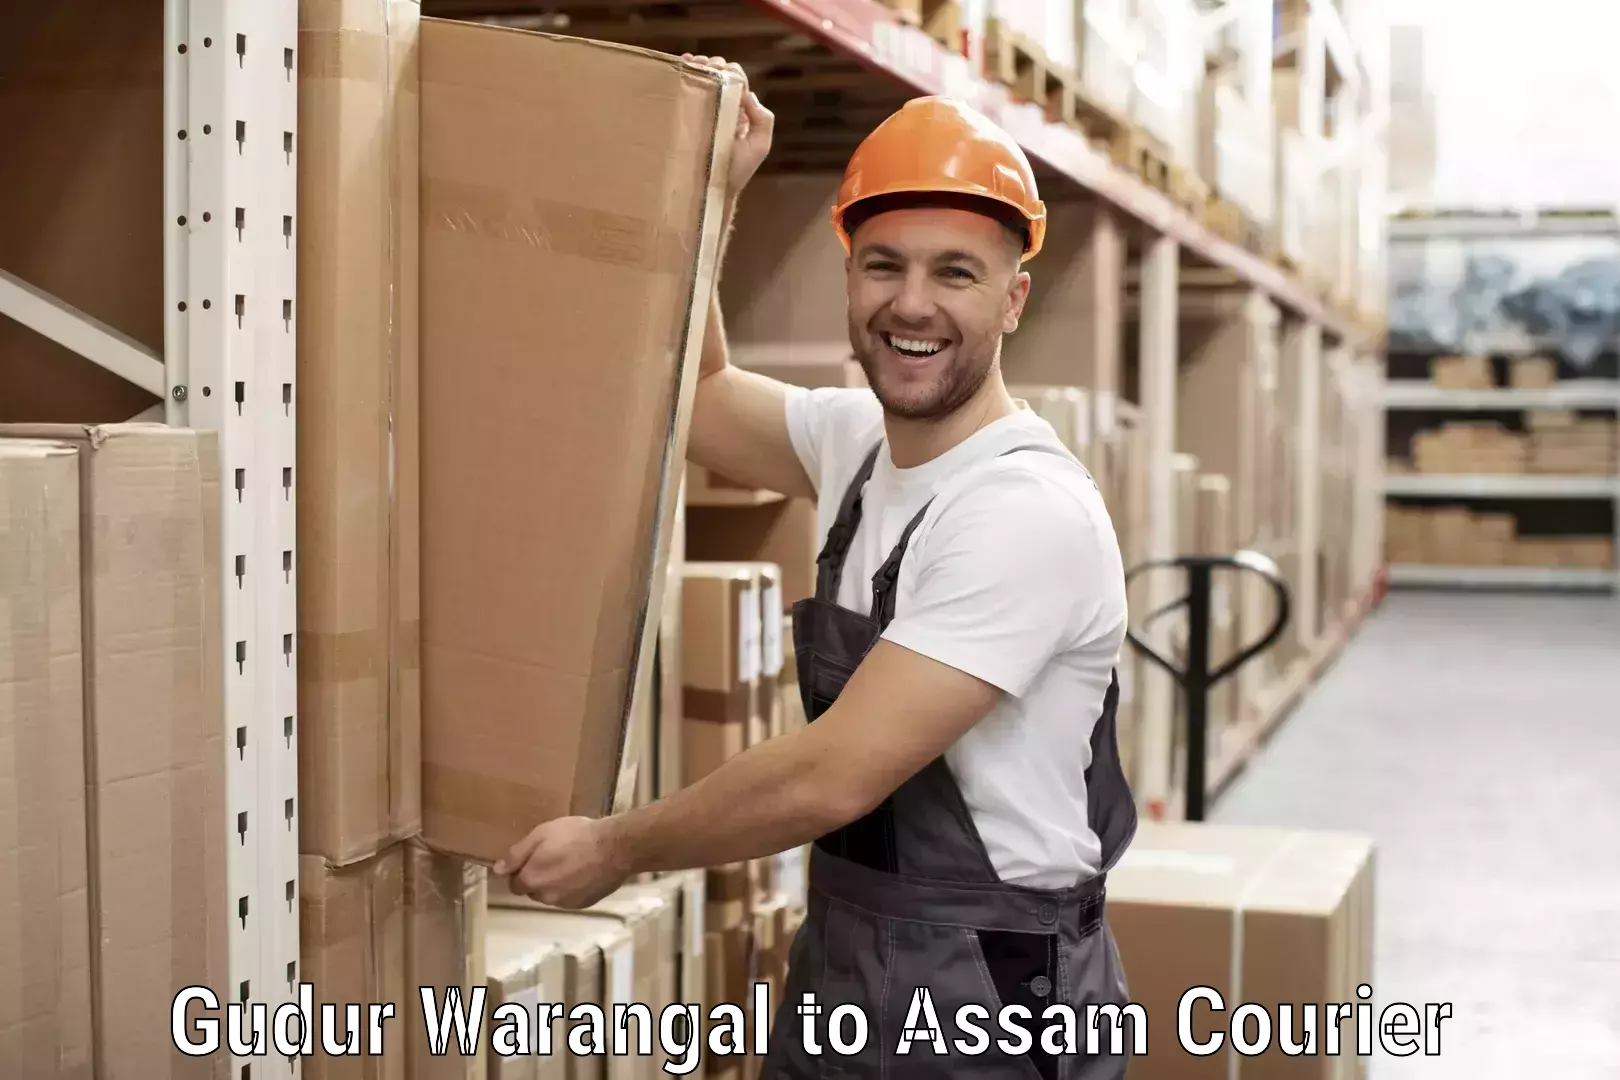 Efficient shipping operations Gudur Warangal to Lala Assam